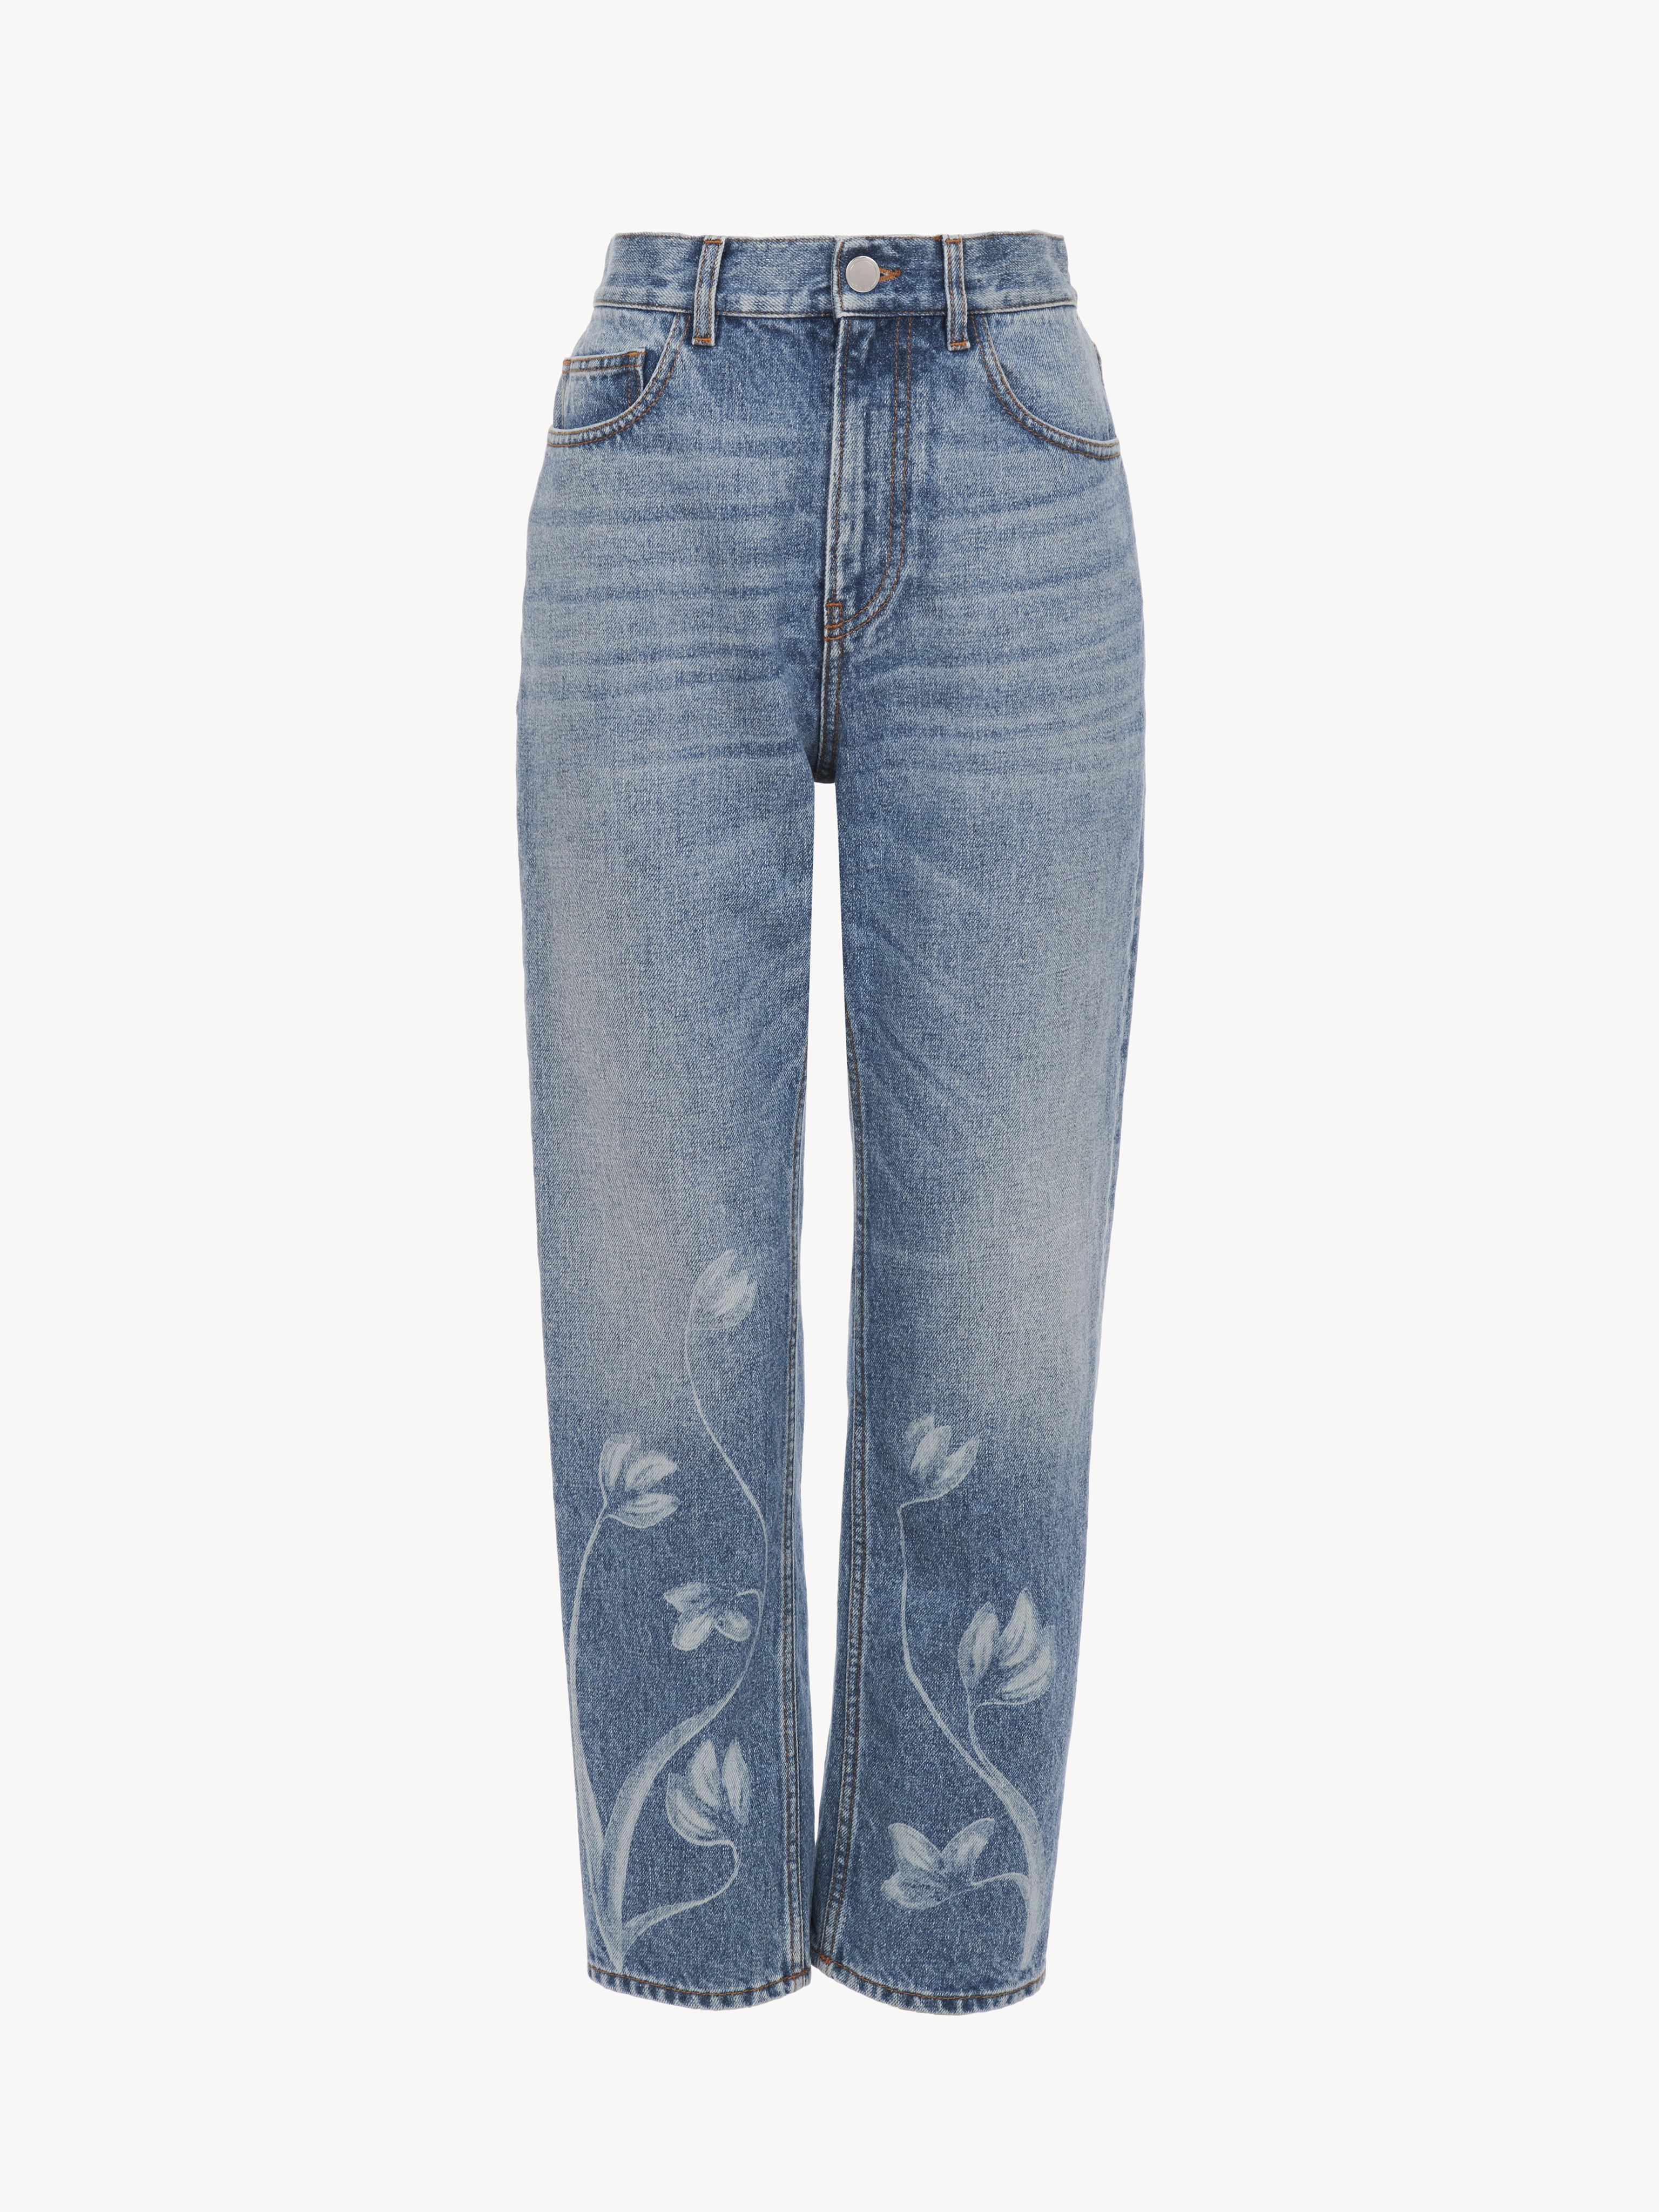 Chloé Straight Cropped Jeans Blue Size 30 87% Cotton, 13% Hemp